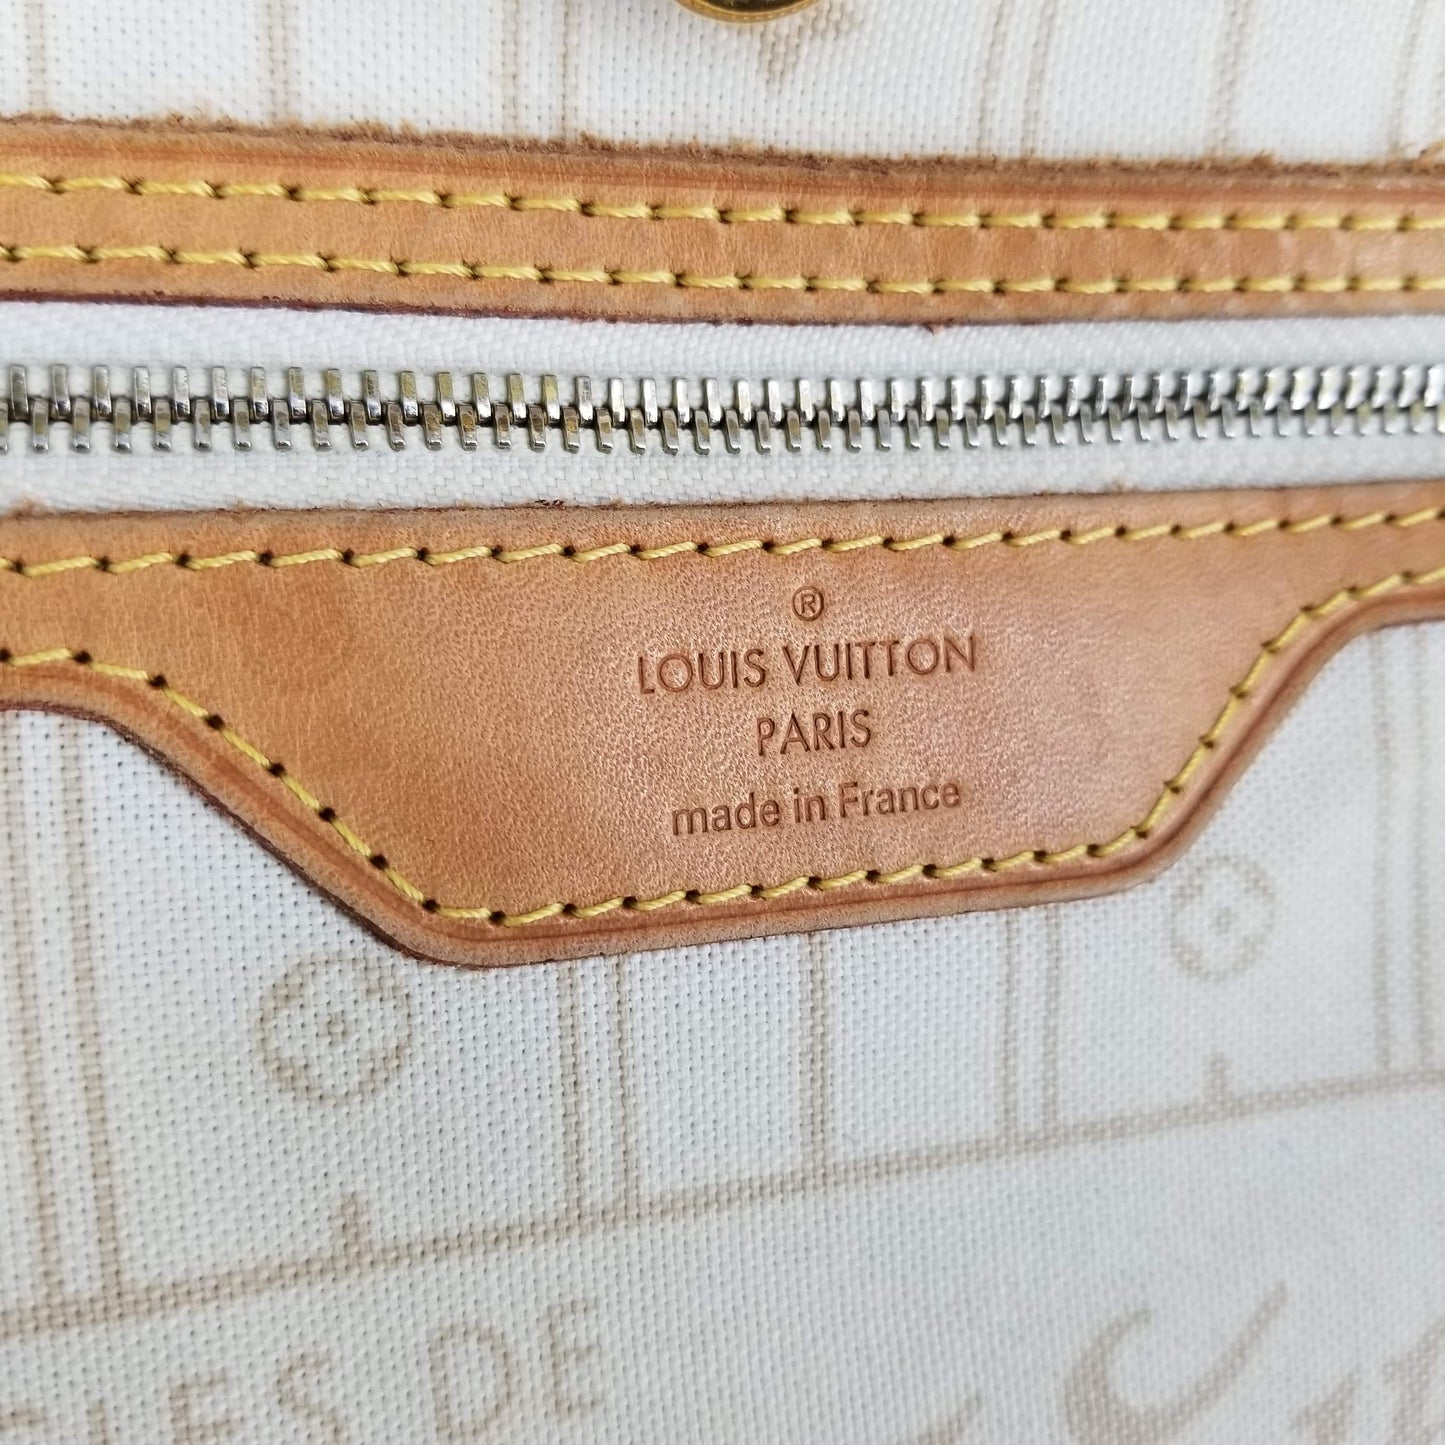 Authentic Louis Vuitton Damier Azure Neverfull MM